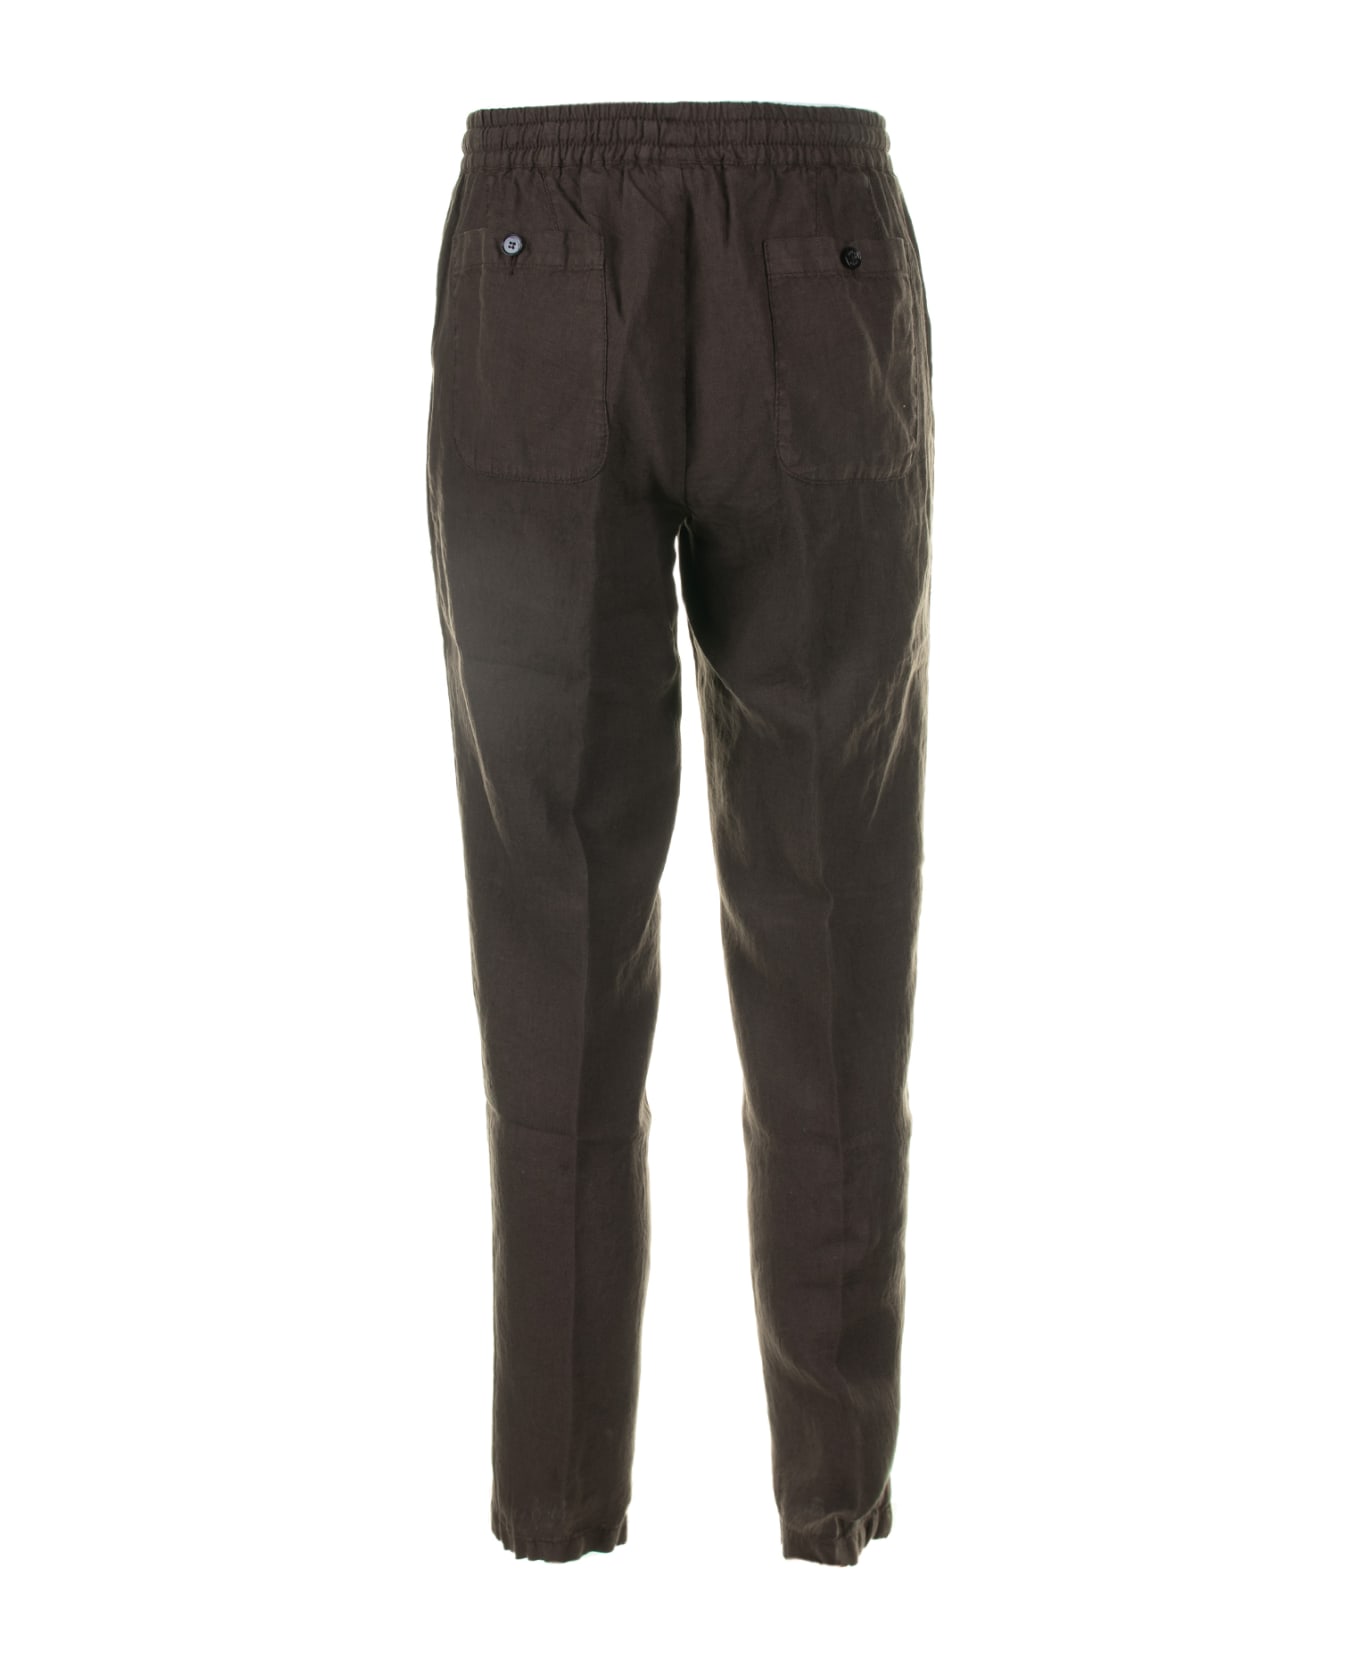 Altea Brown Linen Trousers With Drawstring - T.MORO スウェットパンツ